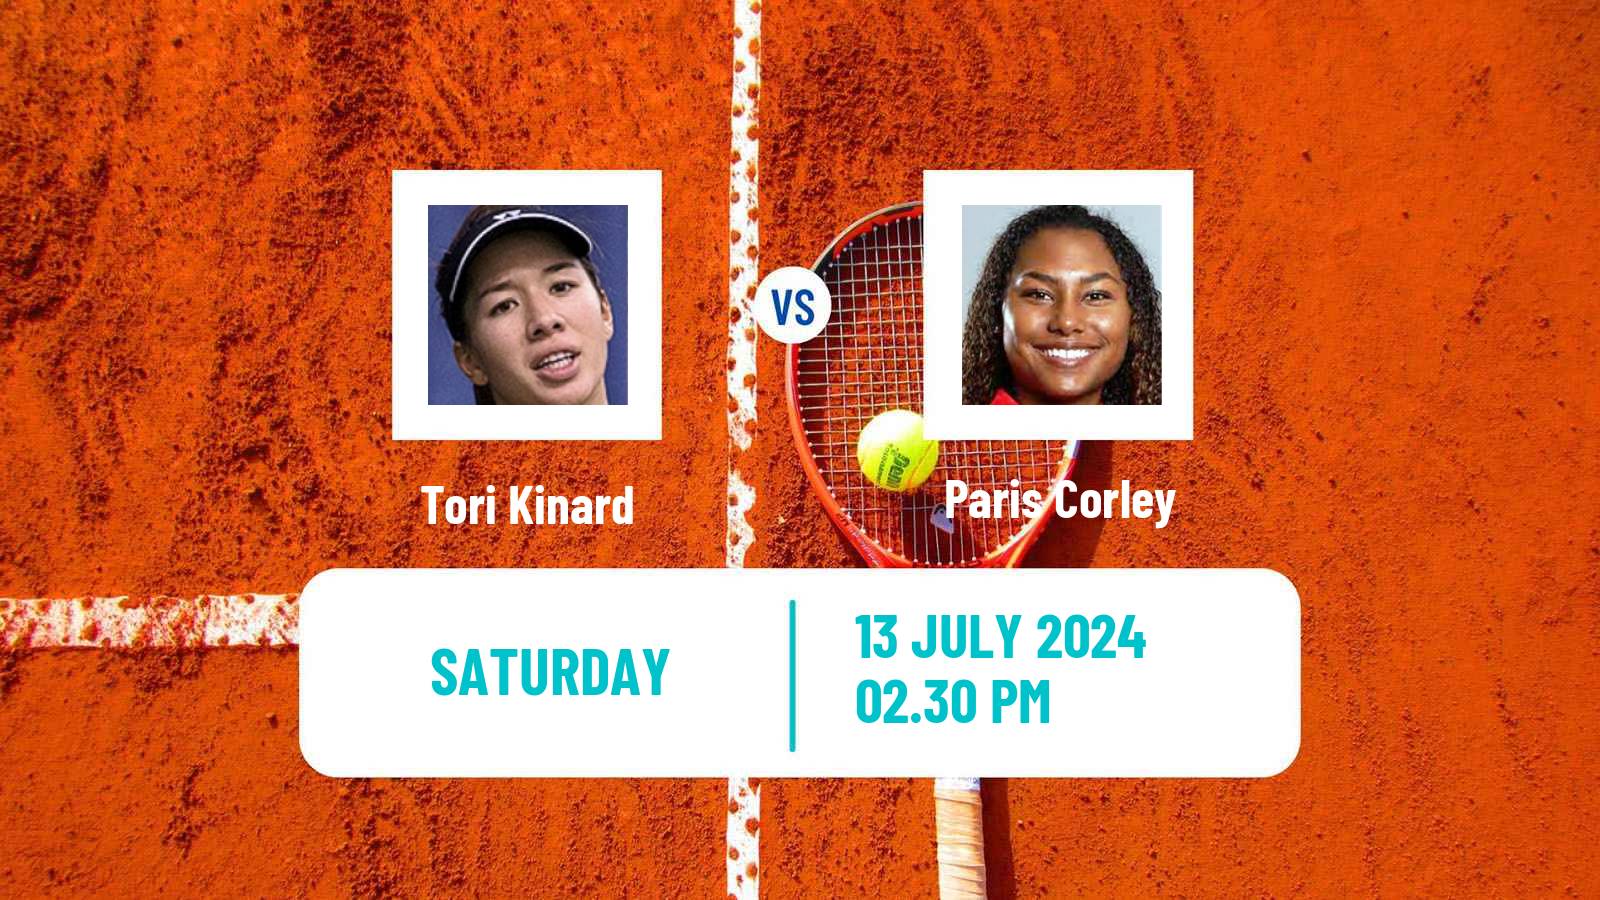 Tennis ITF W15 Lakewood Ca 2 Women Tori Kinard - Paris Corley